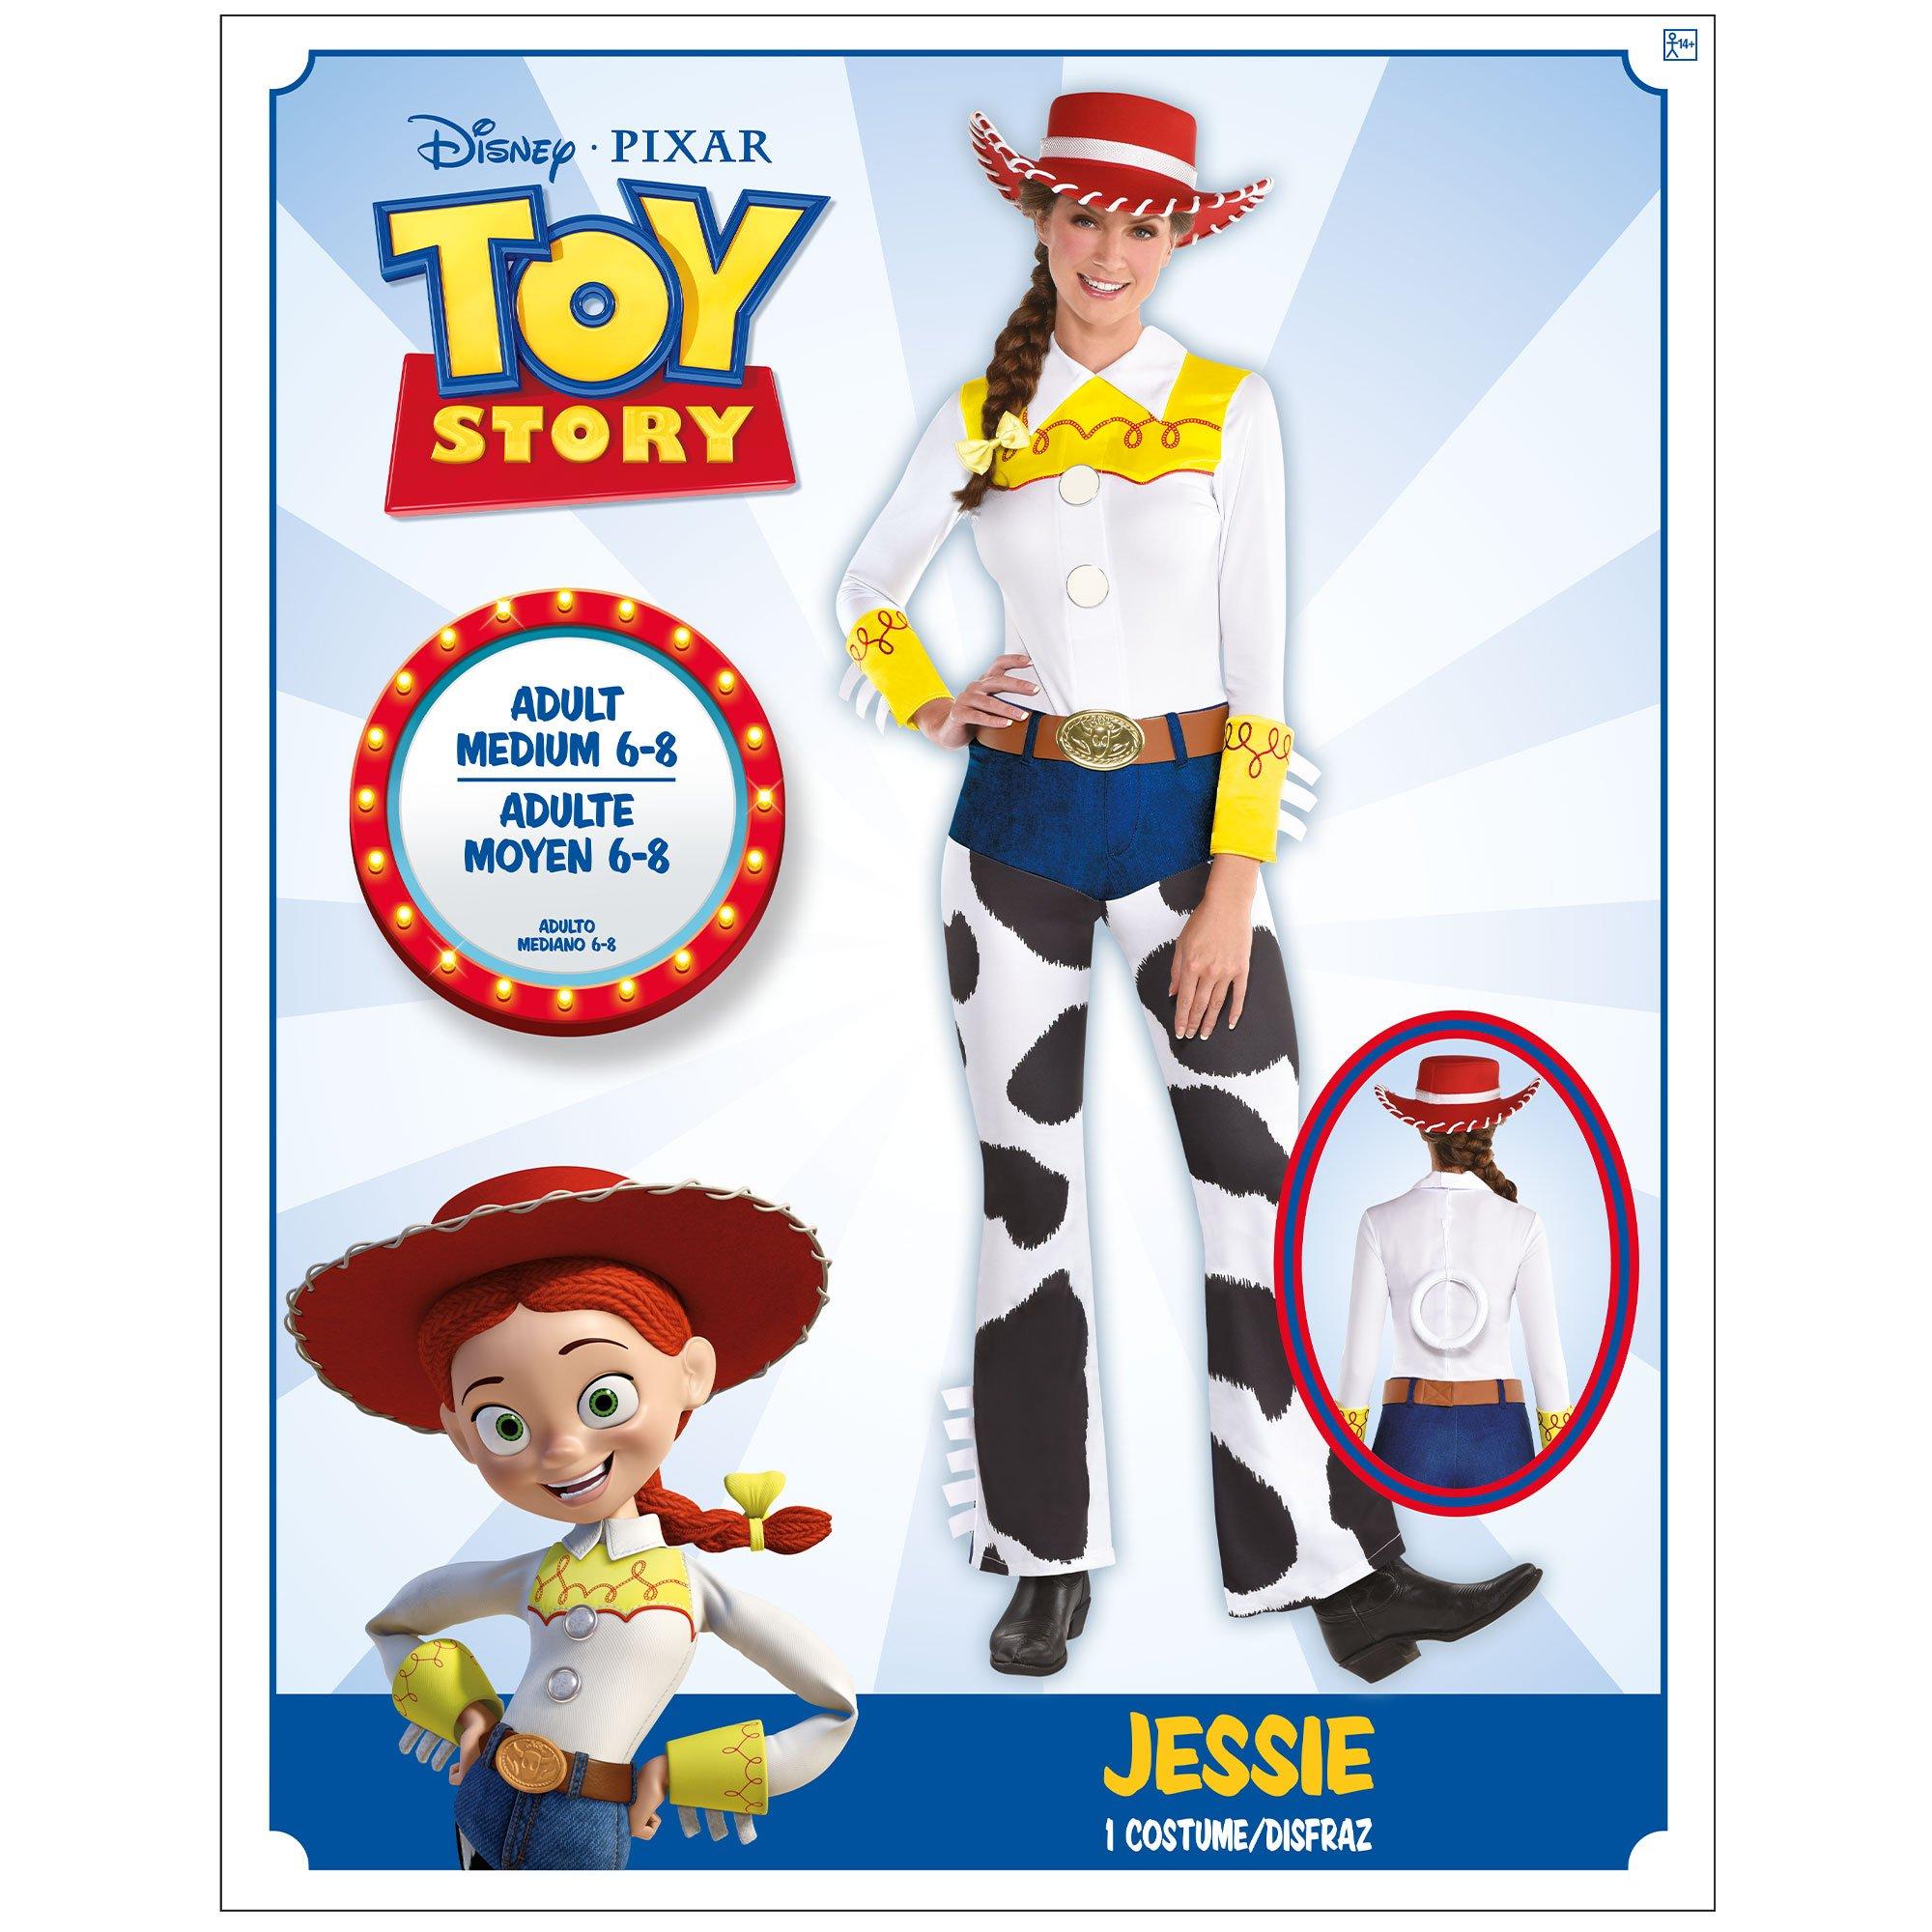 Disfraz de Jessie de Disney Pixar, Toy Story